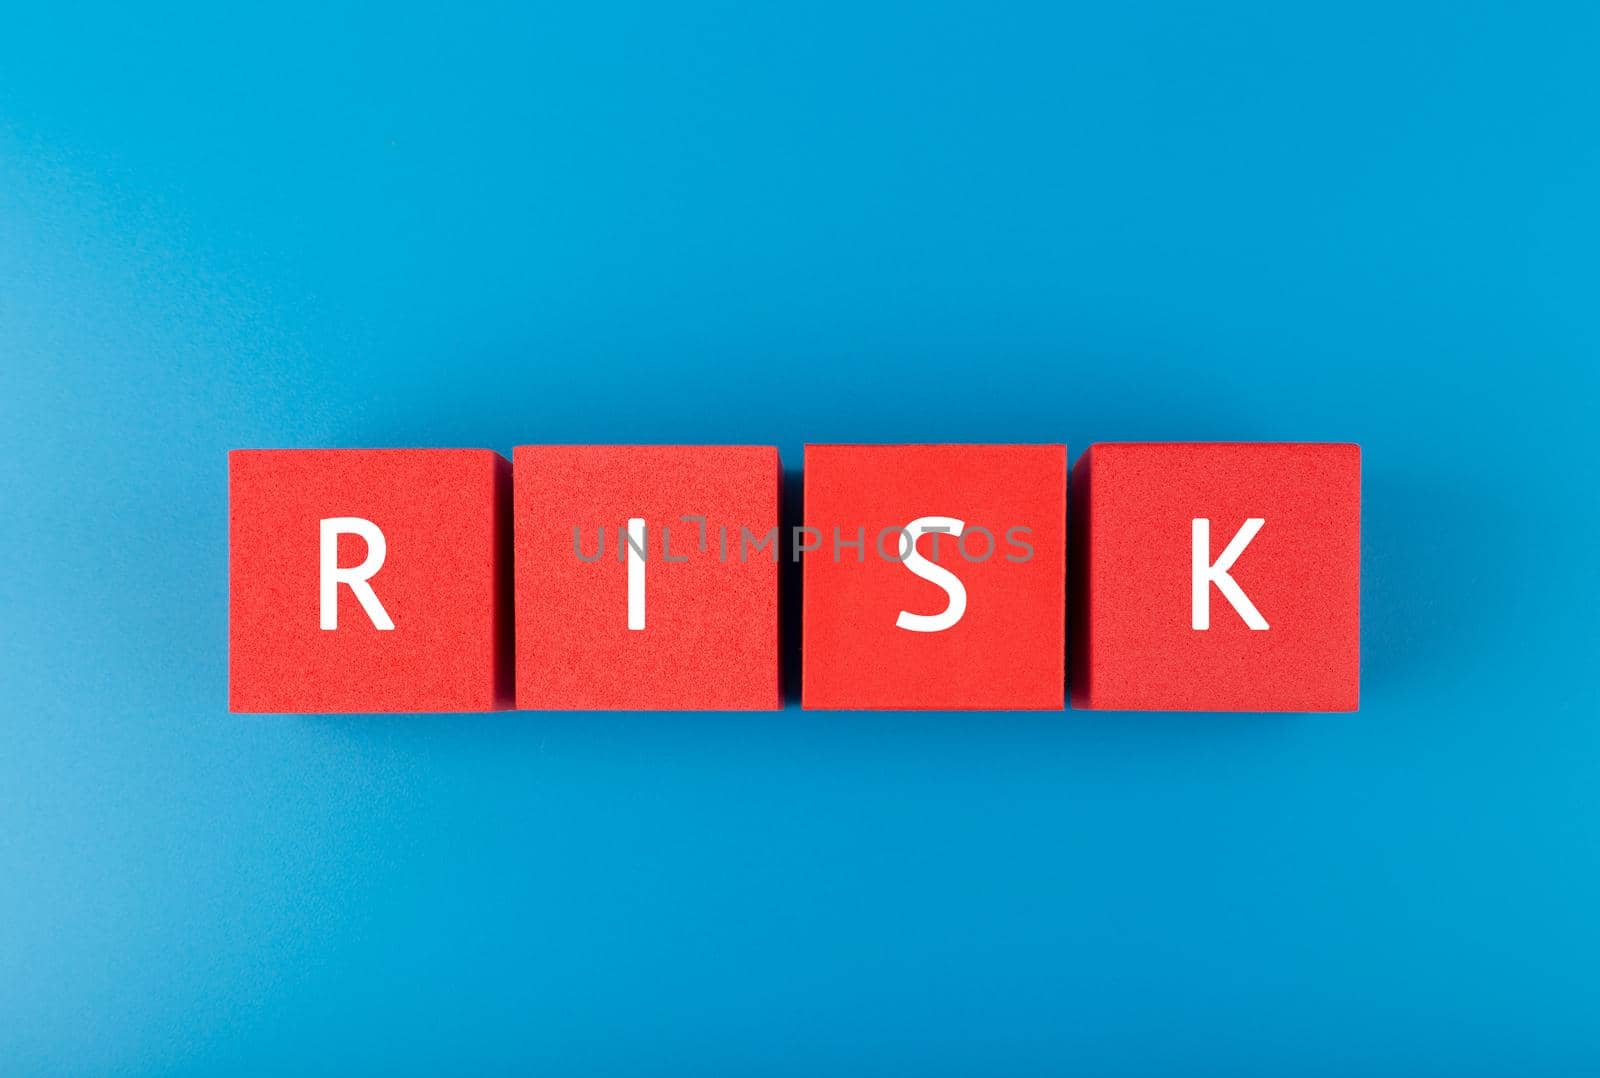 Risk single word written on red cubes against blue background by Senorina_Irina